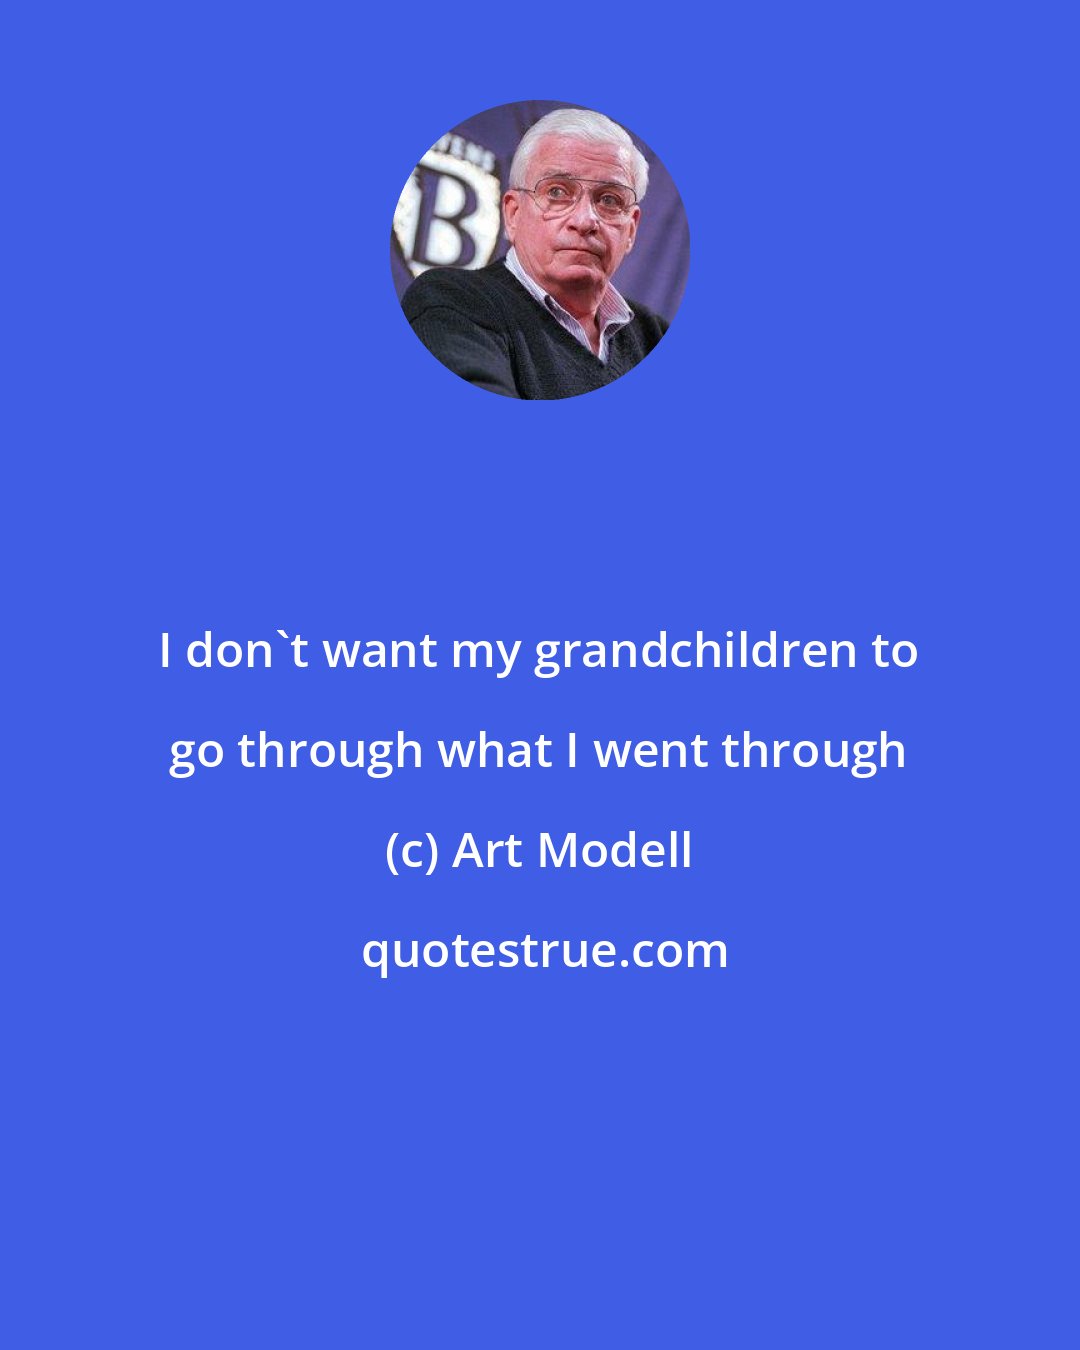 Art Modell: I don't want my grandchildren to go through what I went through